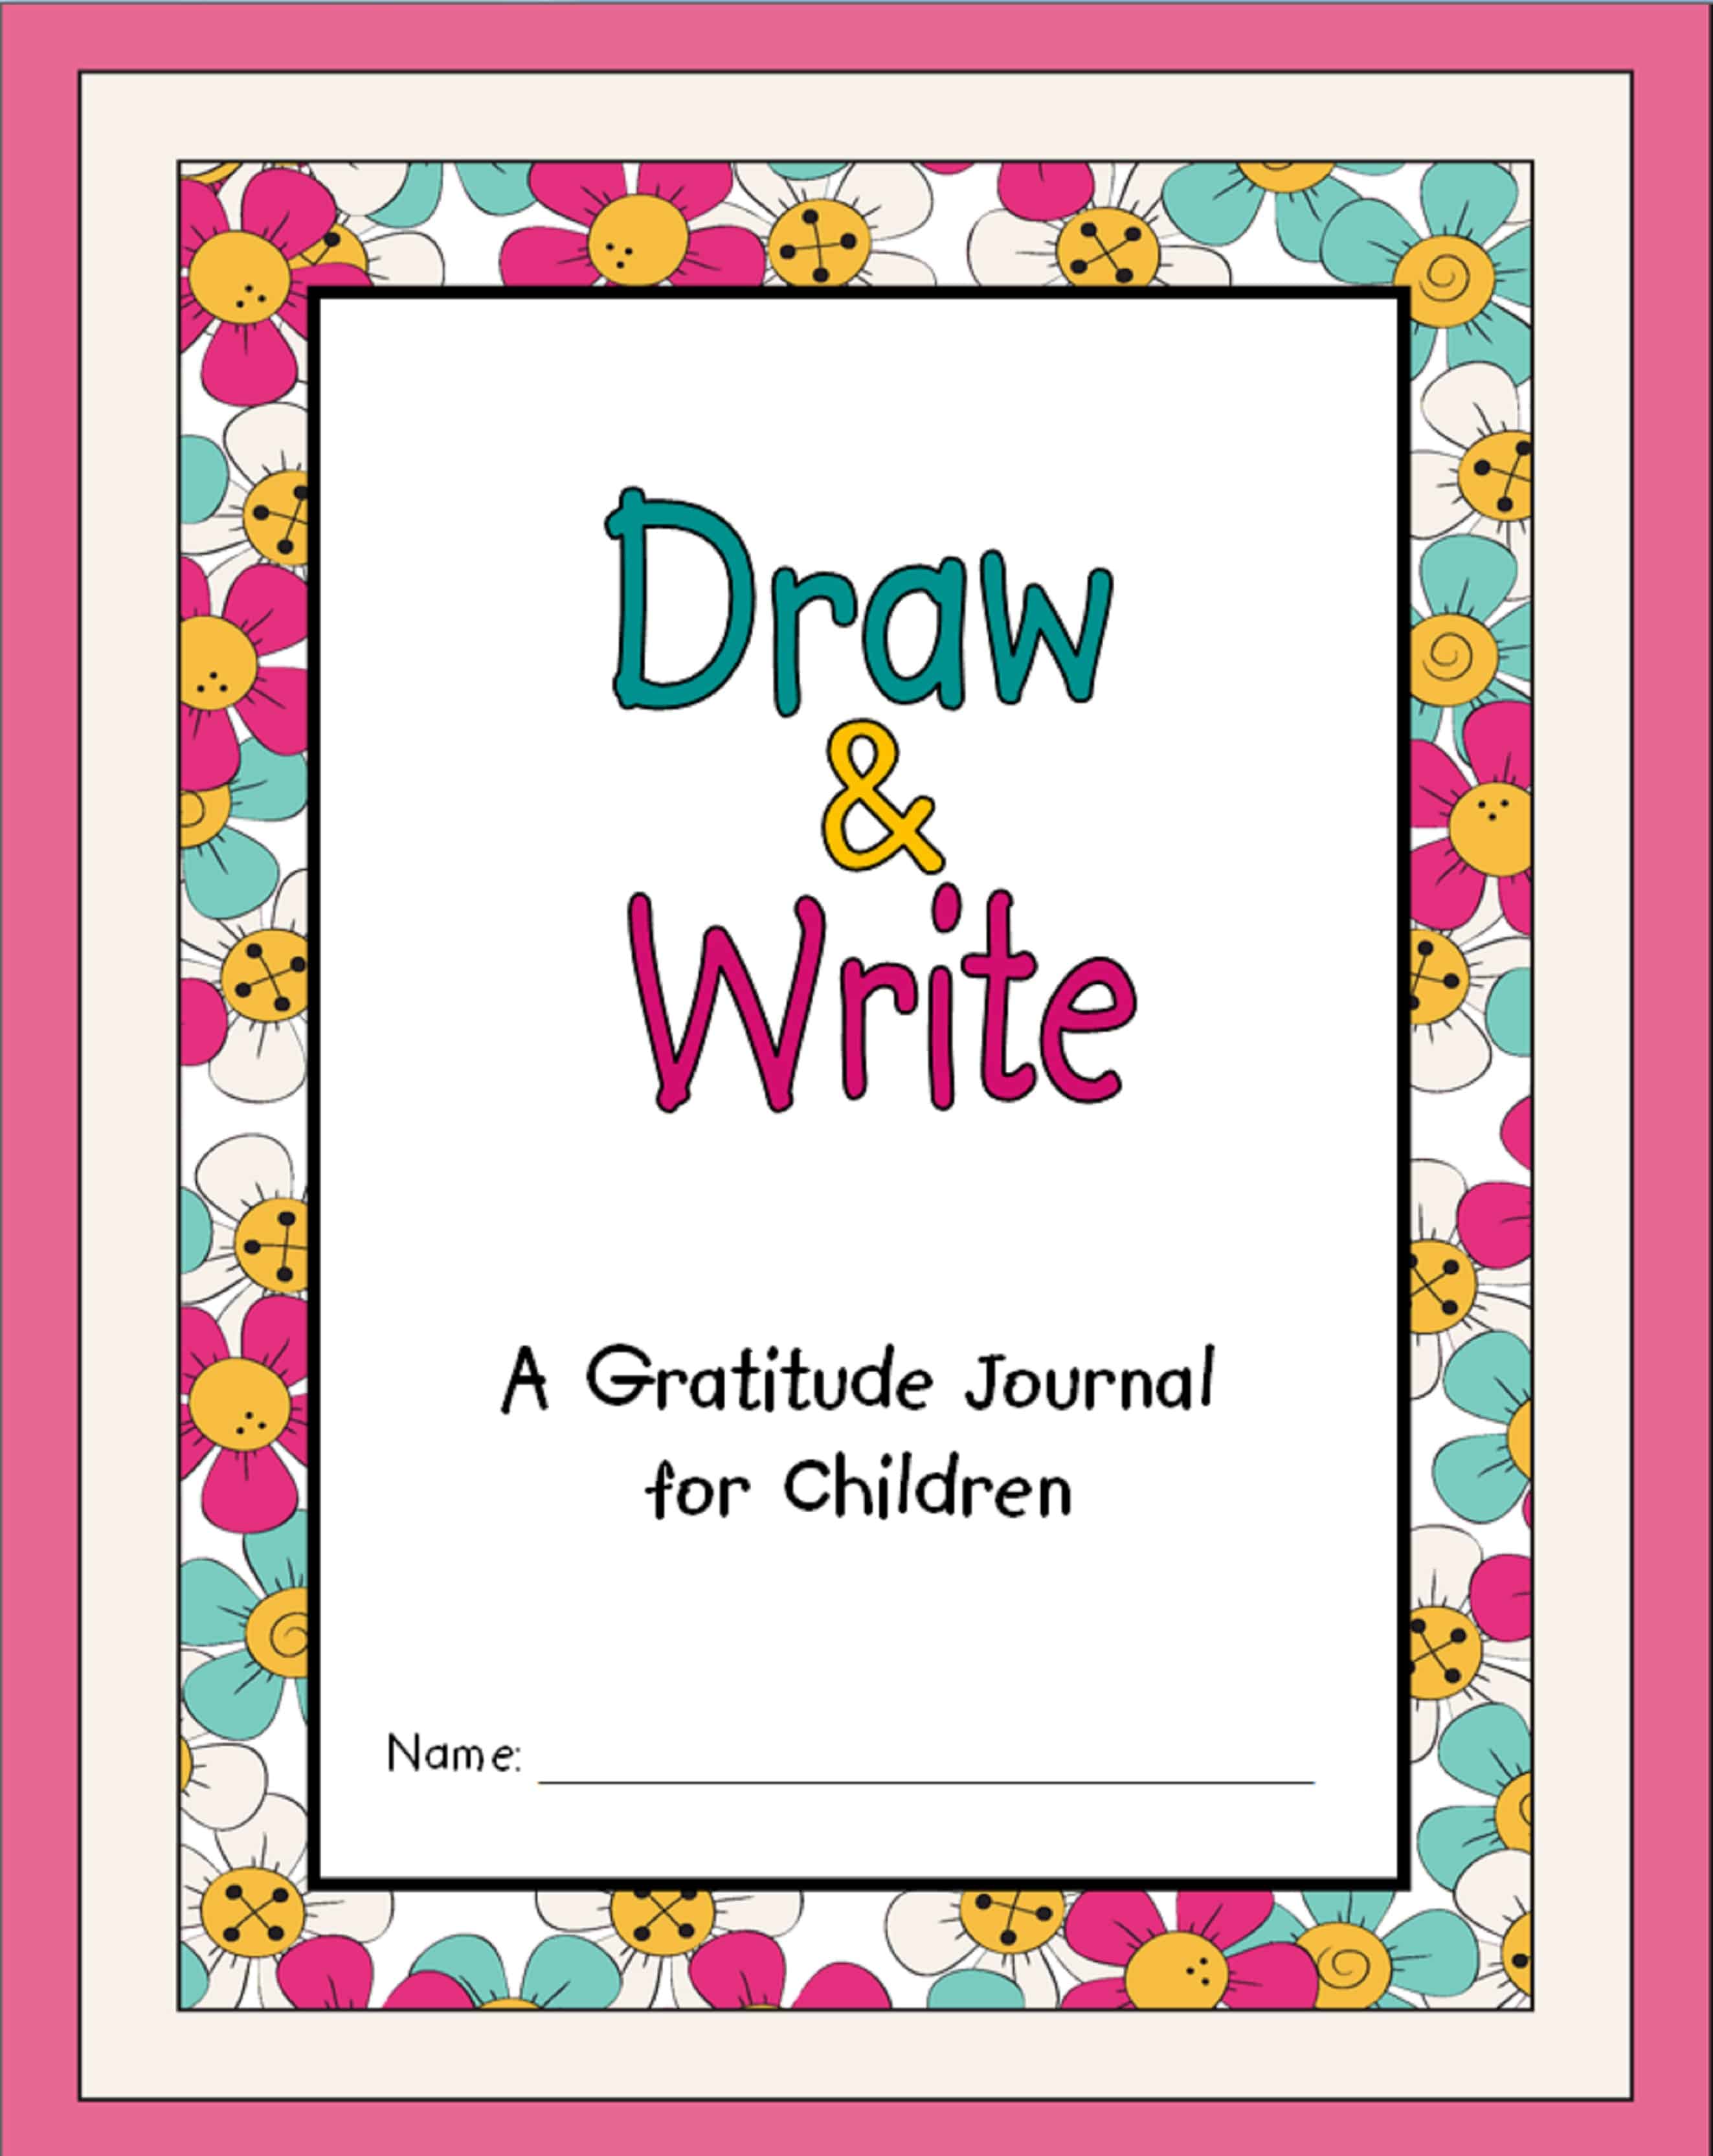 Draw & Write - A Gratitude Journal for Children